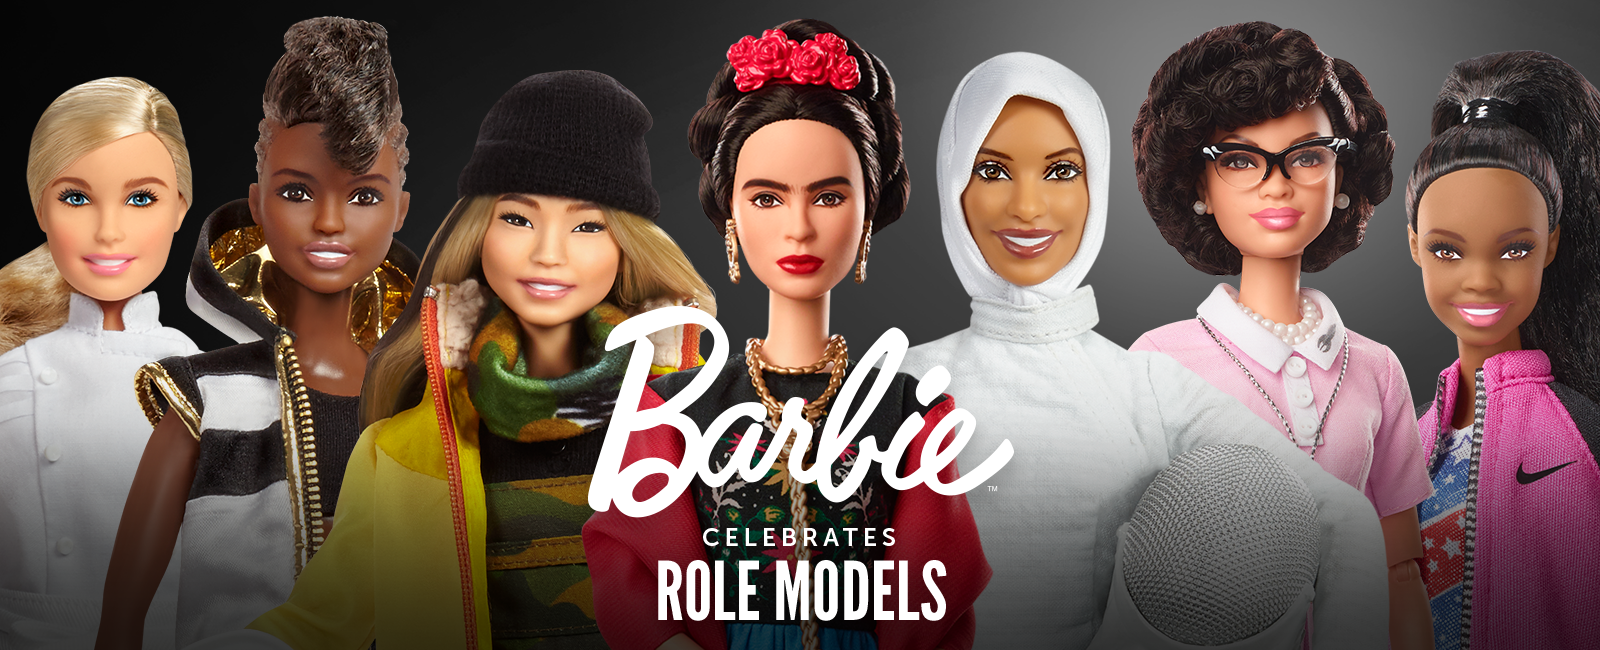 Barbie shero -Mattel